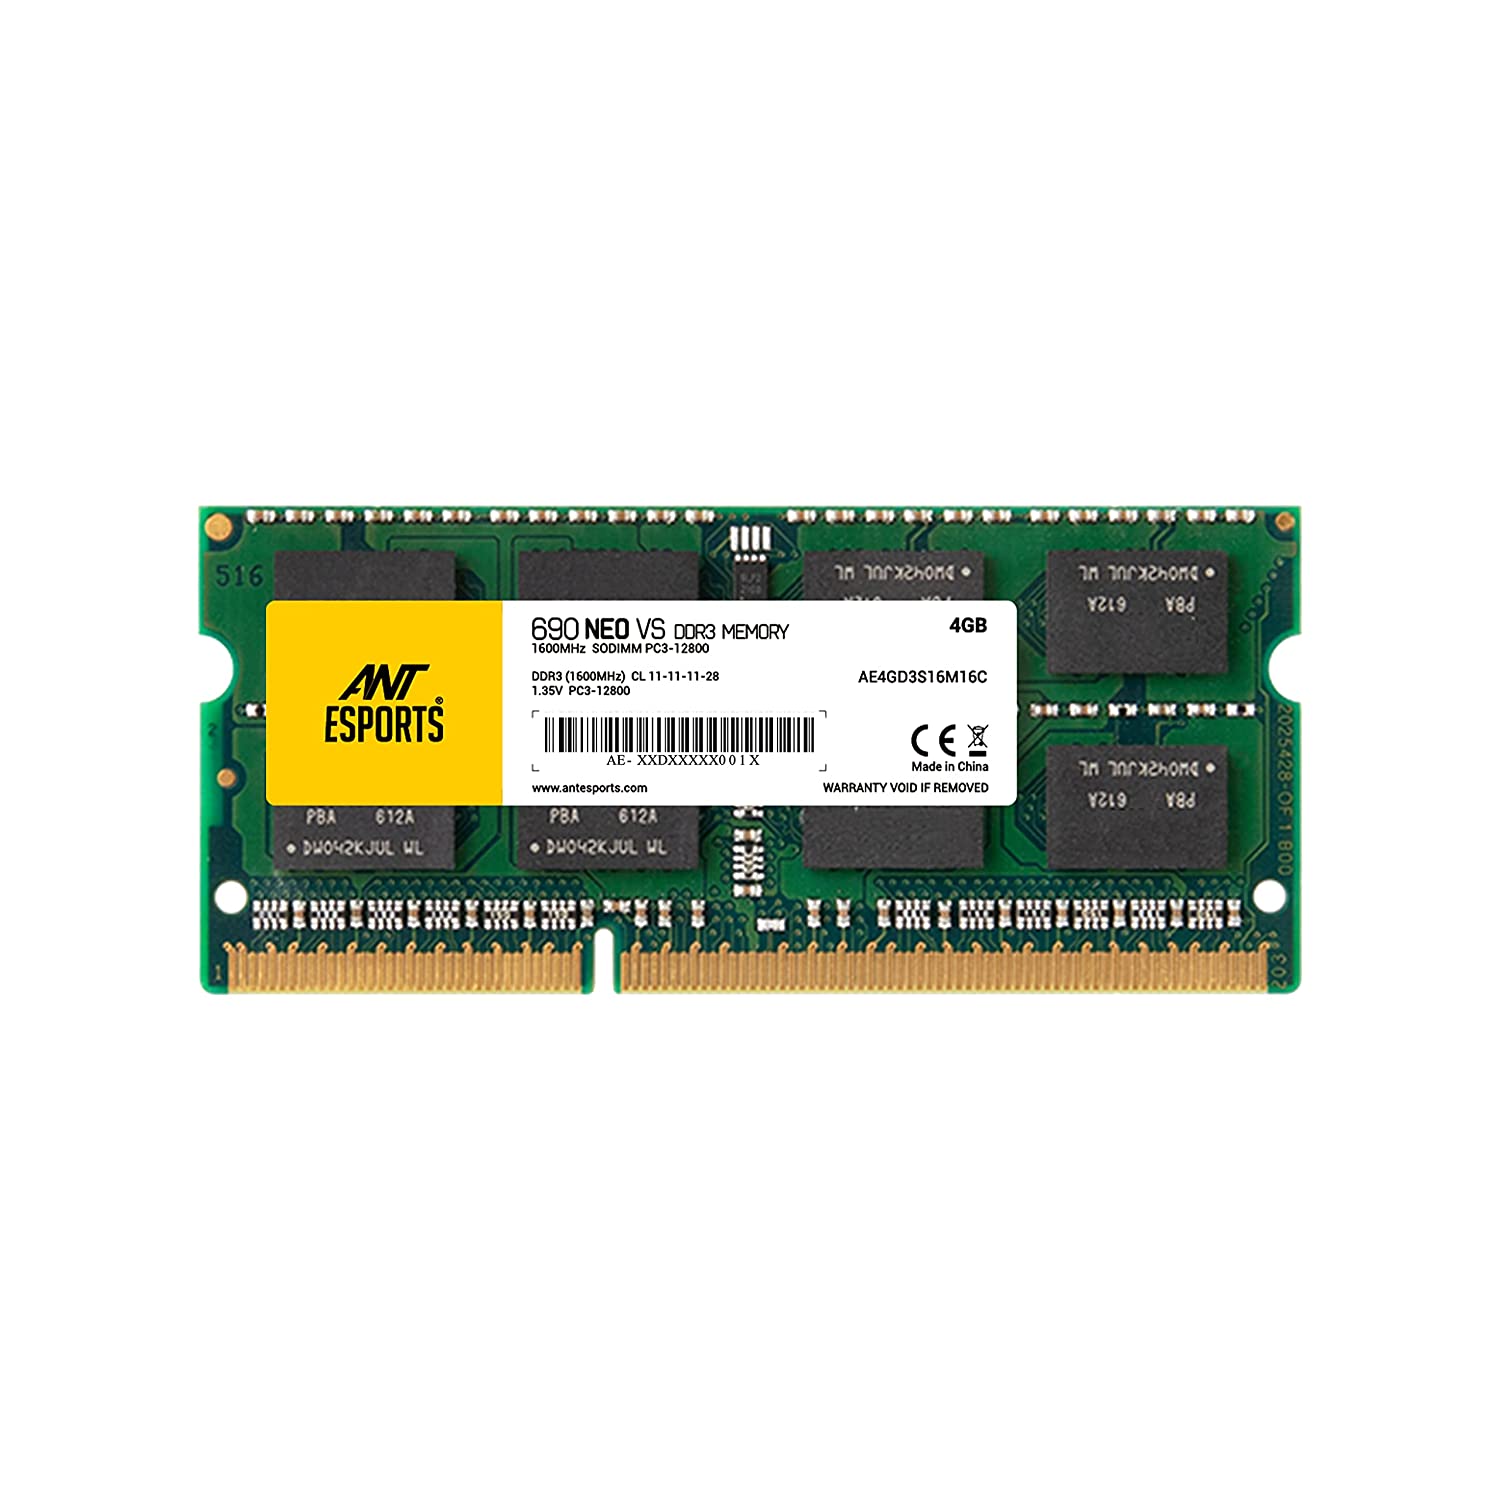 Ant Esports 690 Neo VS 4GB (4GBx1) DDR3 1600MHz Laptop RAM-Computer Desktop RAM-dealsplant